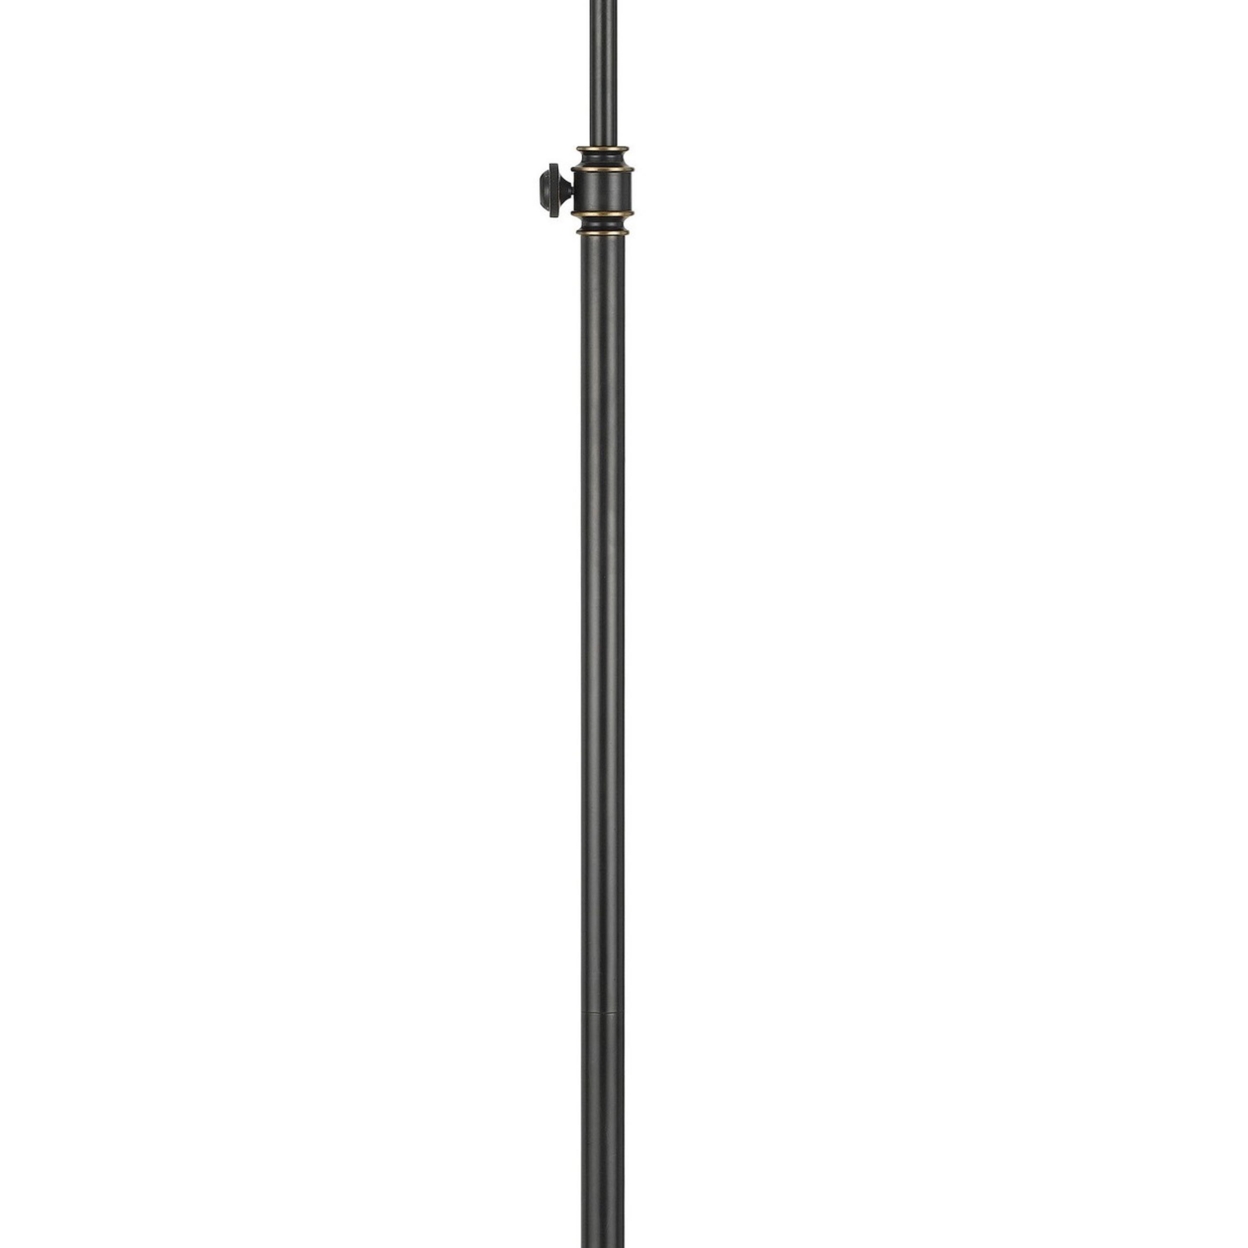 60 Watt Metal Lamp With Adjustable Pole And Bowl Shade, Black- Saltoro Sherpi